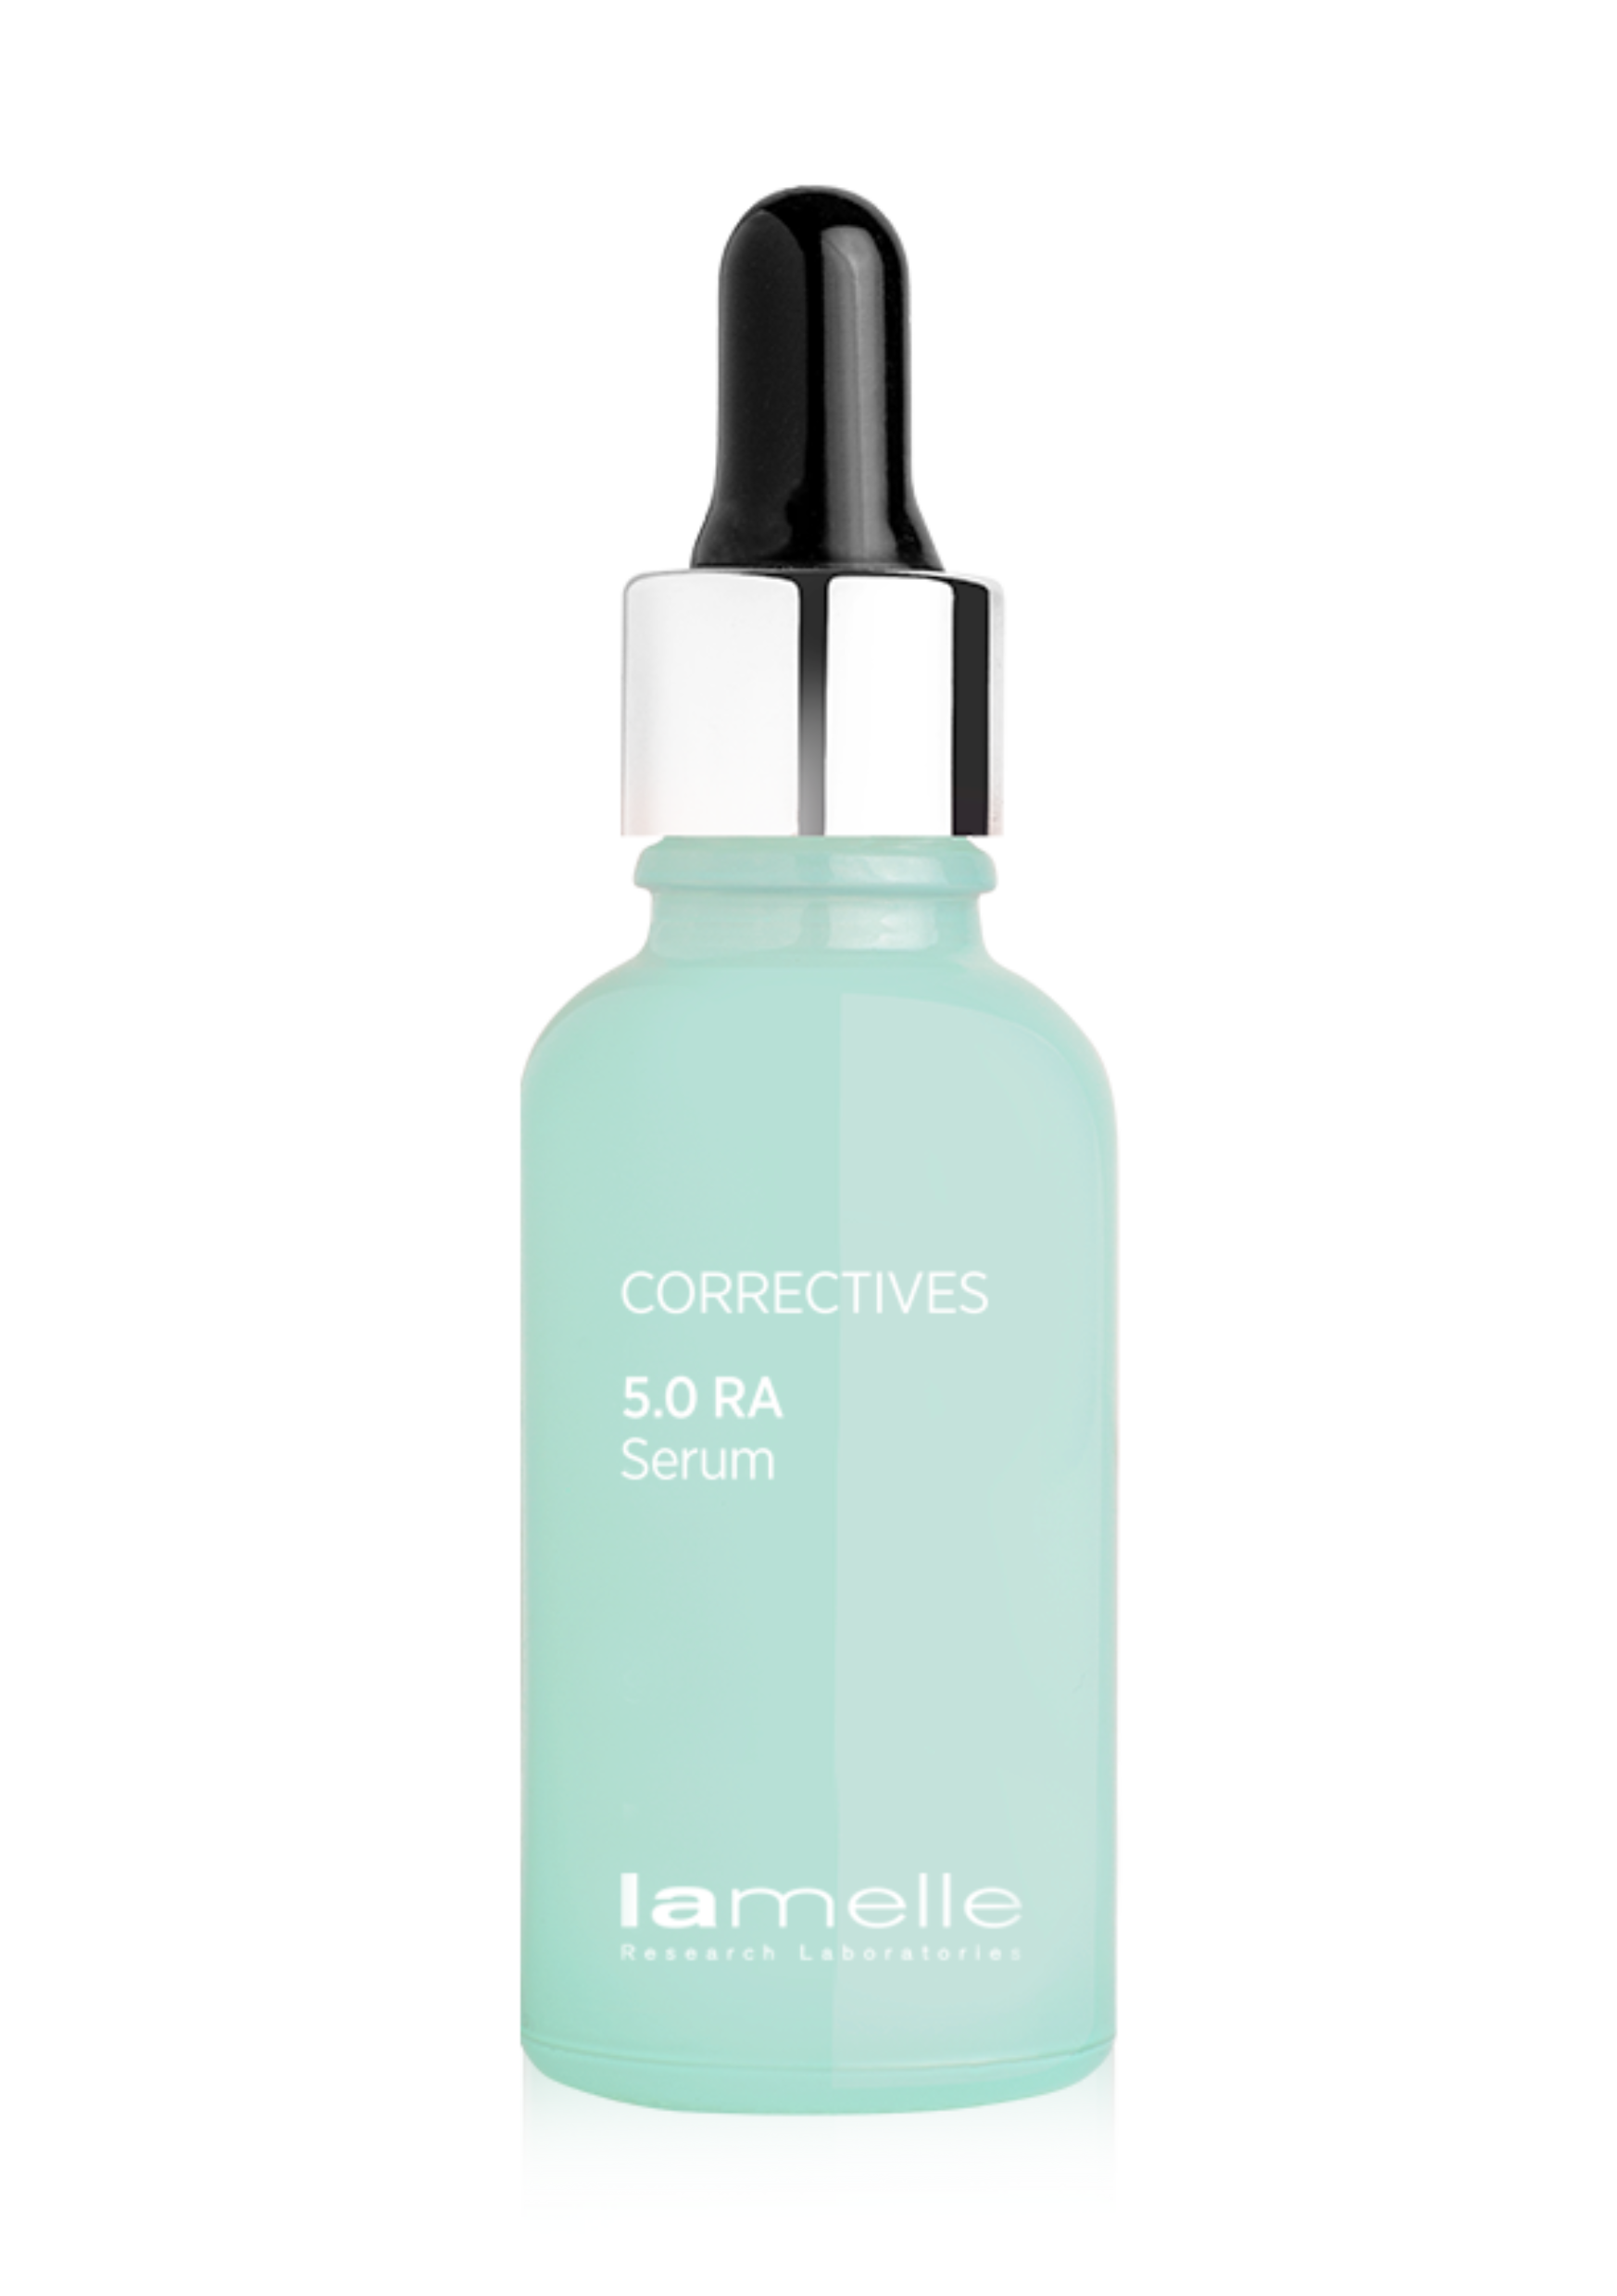 Lamelle® Correctives RA 5.0 Serum